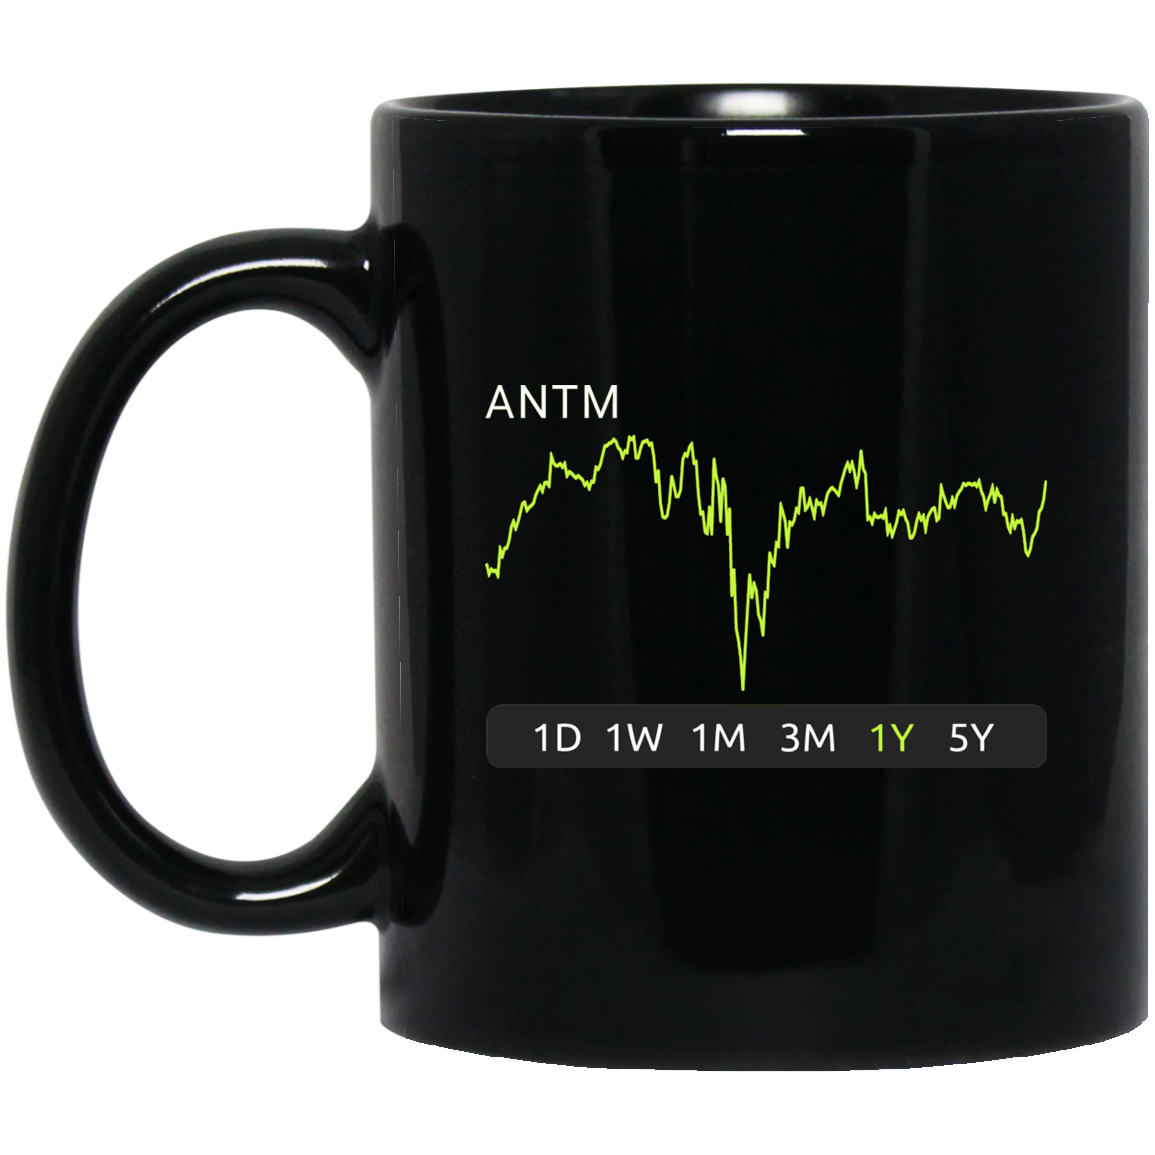 ANTM Stock 1y Mug